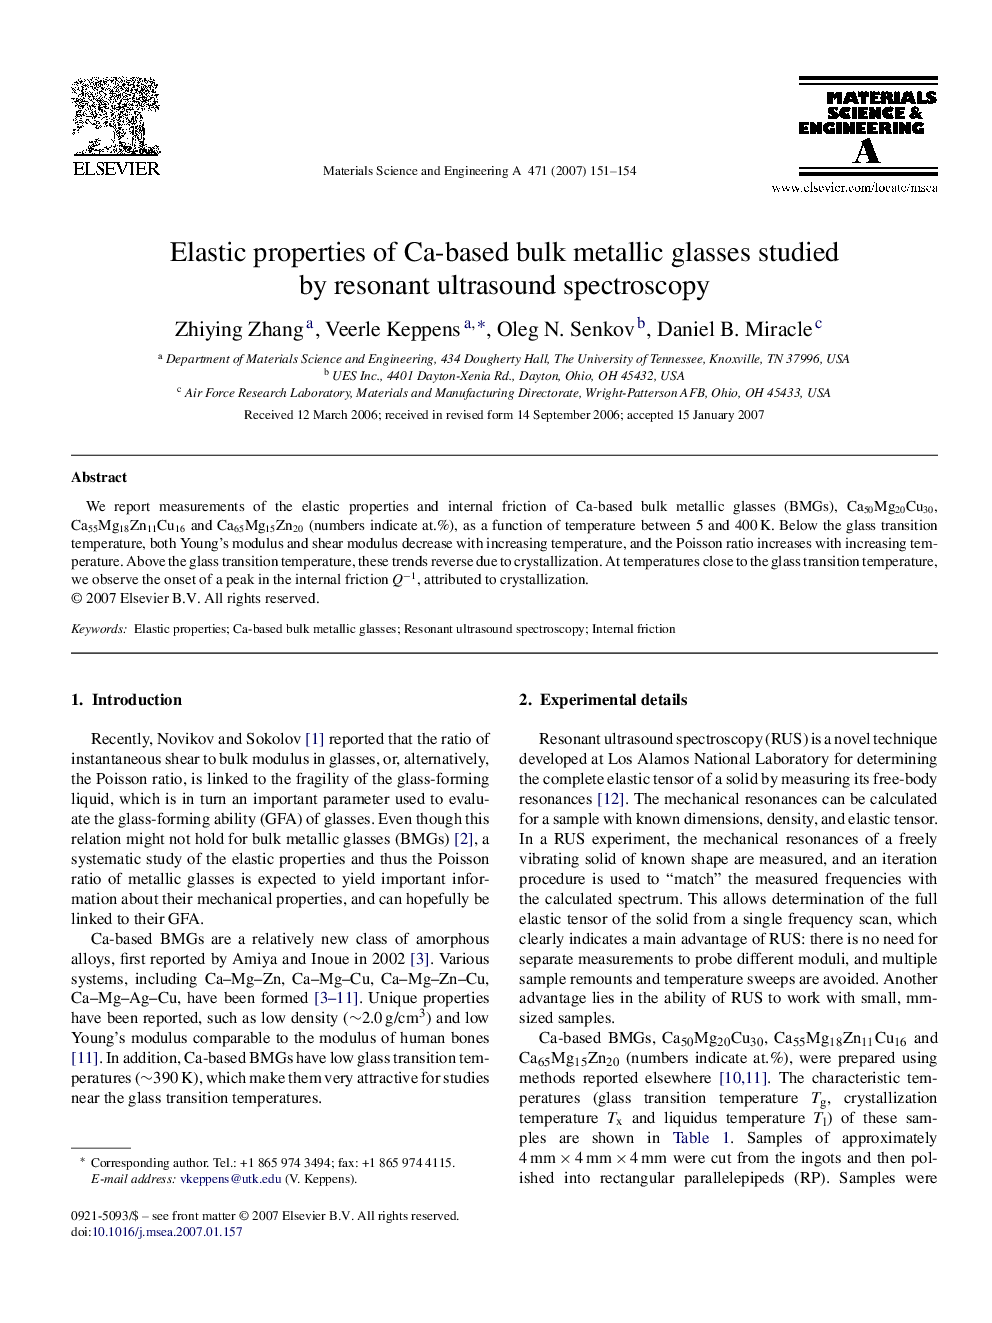 Elastic properties of Ca-based bulk metallic glasses studied by resonant ultrasound spectroscopy